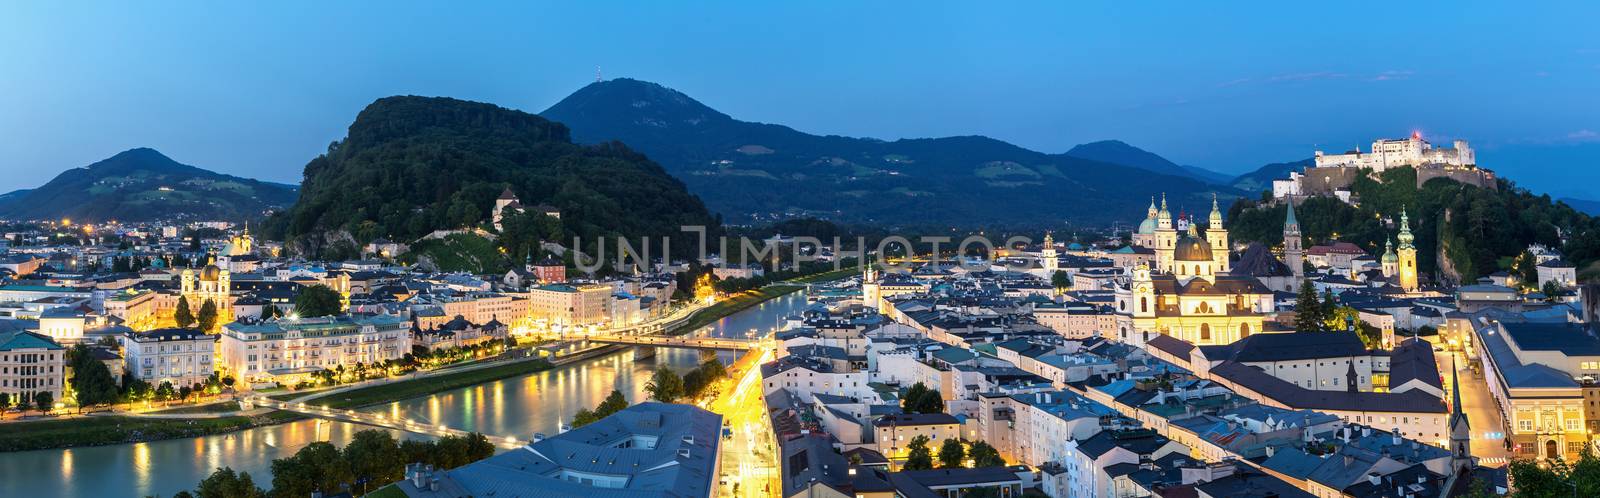 Salzburg Austria at dusk panorama by vichie81